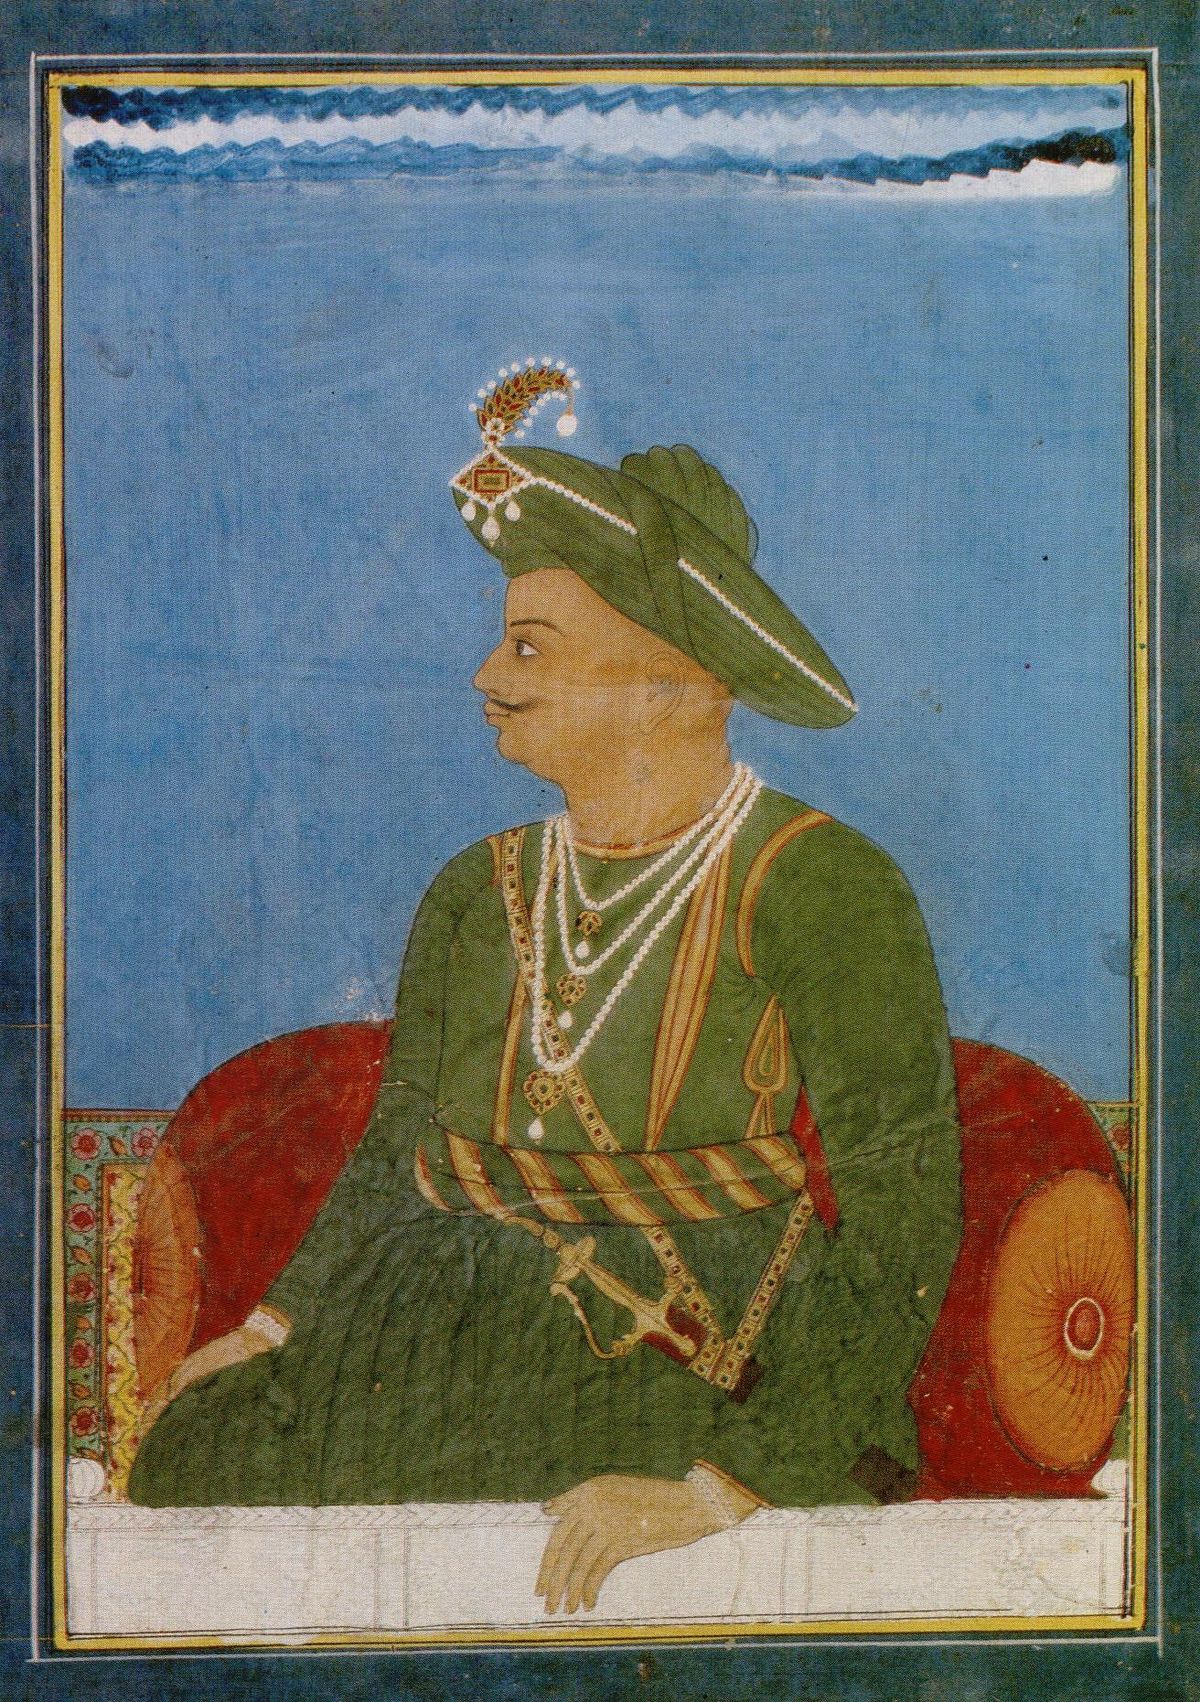 Tipu Sultan - Wikipedia